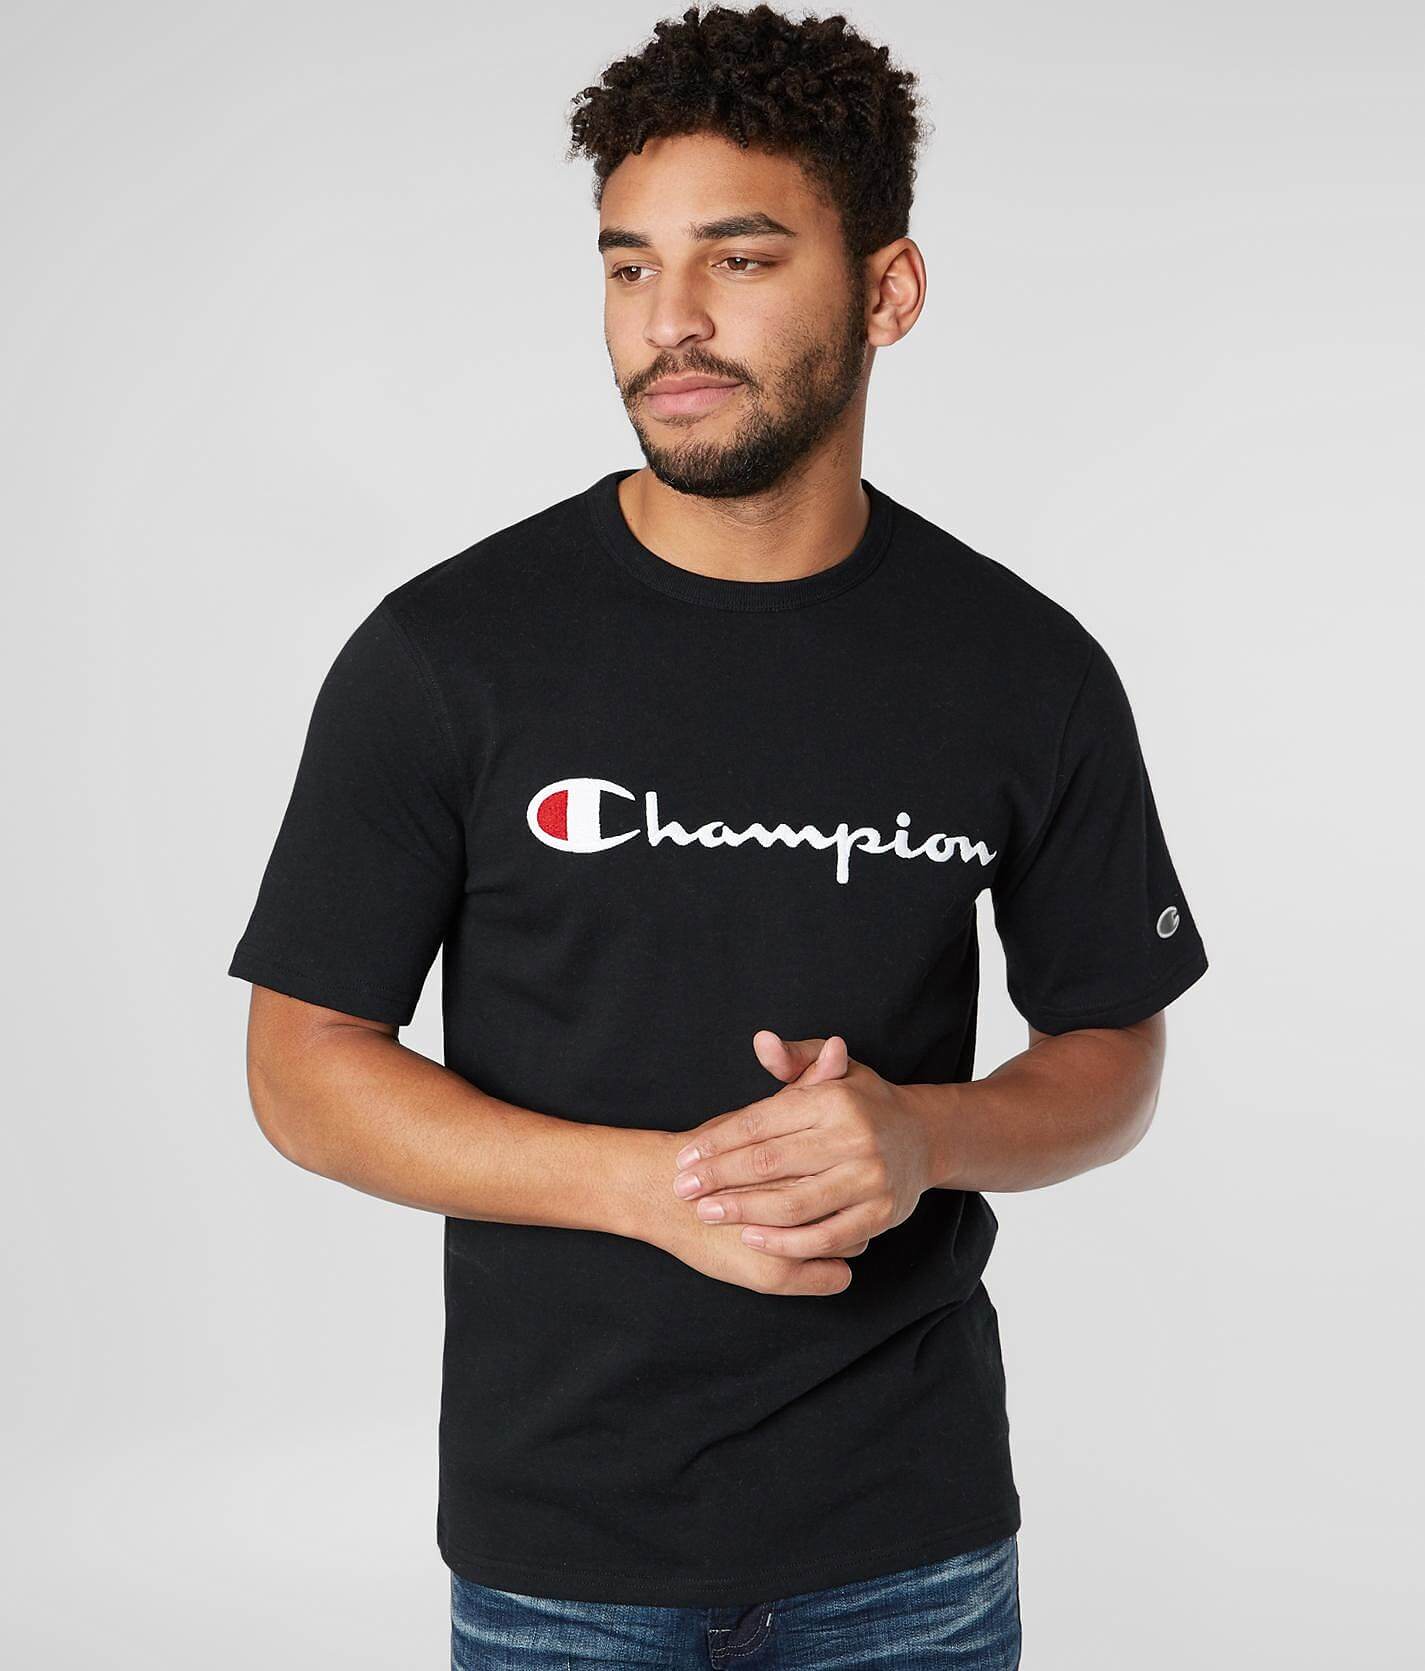 champion guy shirt